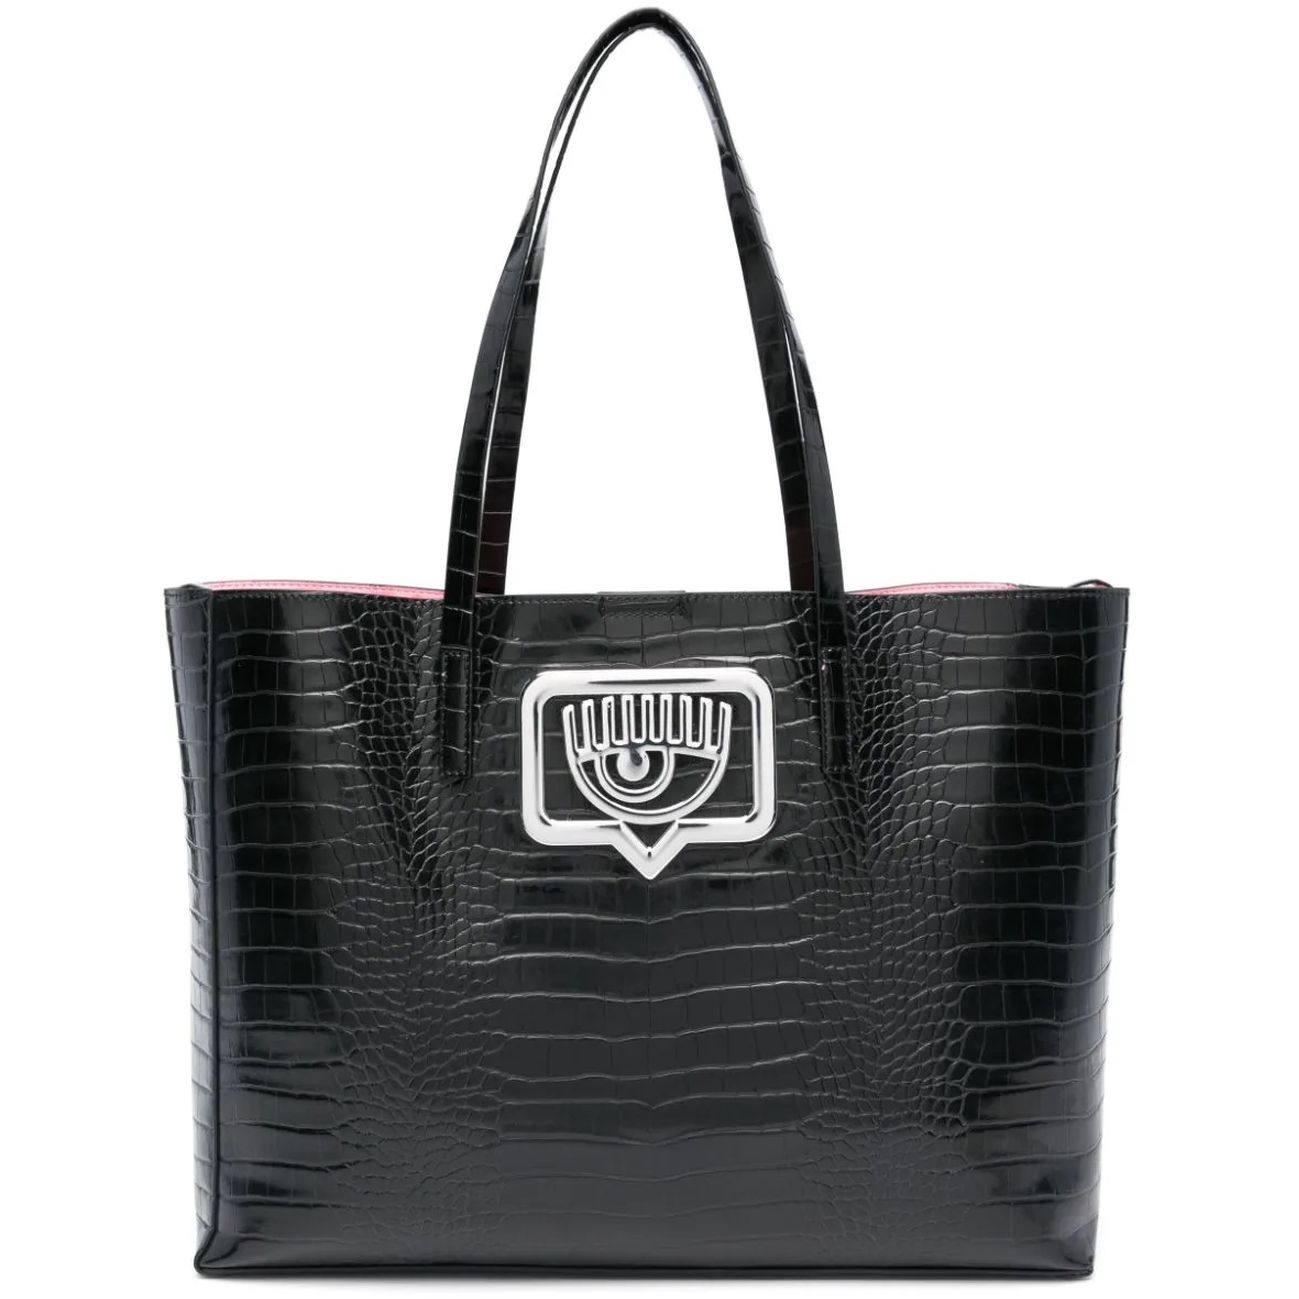 CHIARA FERRAGNI moteriška juoda rankinė Eyelike buckle  shopping bag